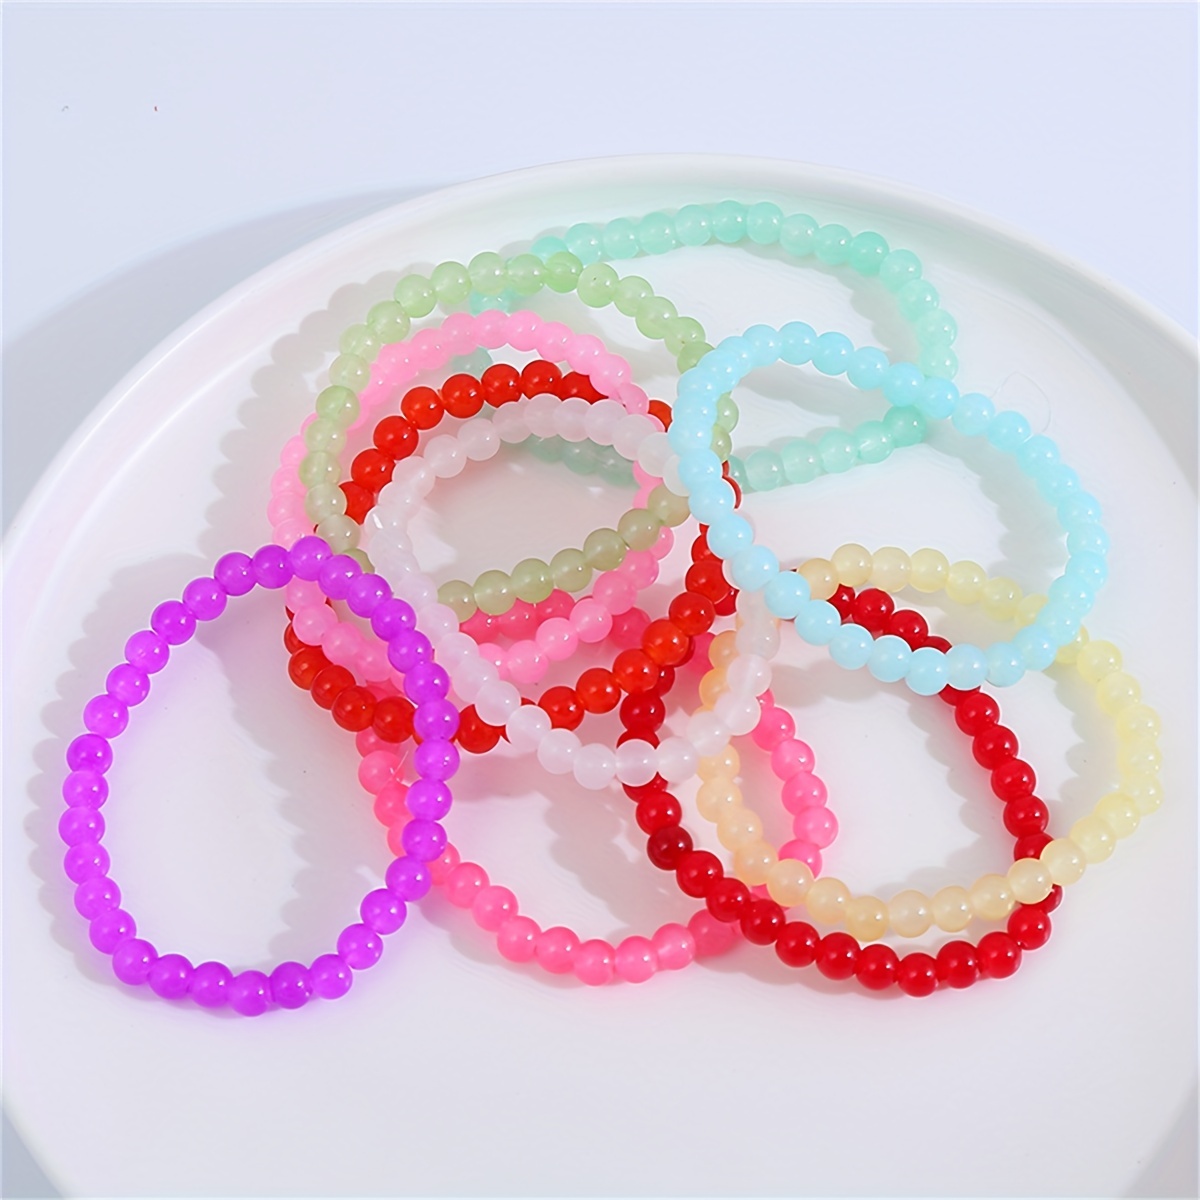 RUBY 3 mm Beads for Bracelets Pastel, 24 Colourful Macaron Matte Glass  Beads for Threading, Mini Bead Set Charm Kit for DIY Bracelet Making,  Holidays